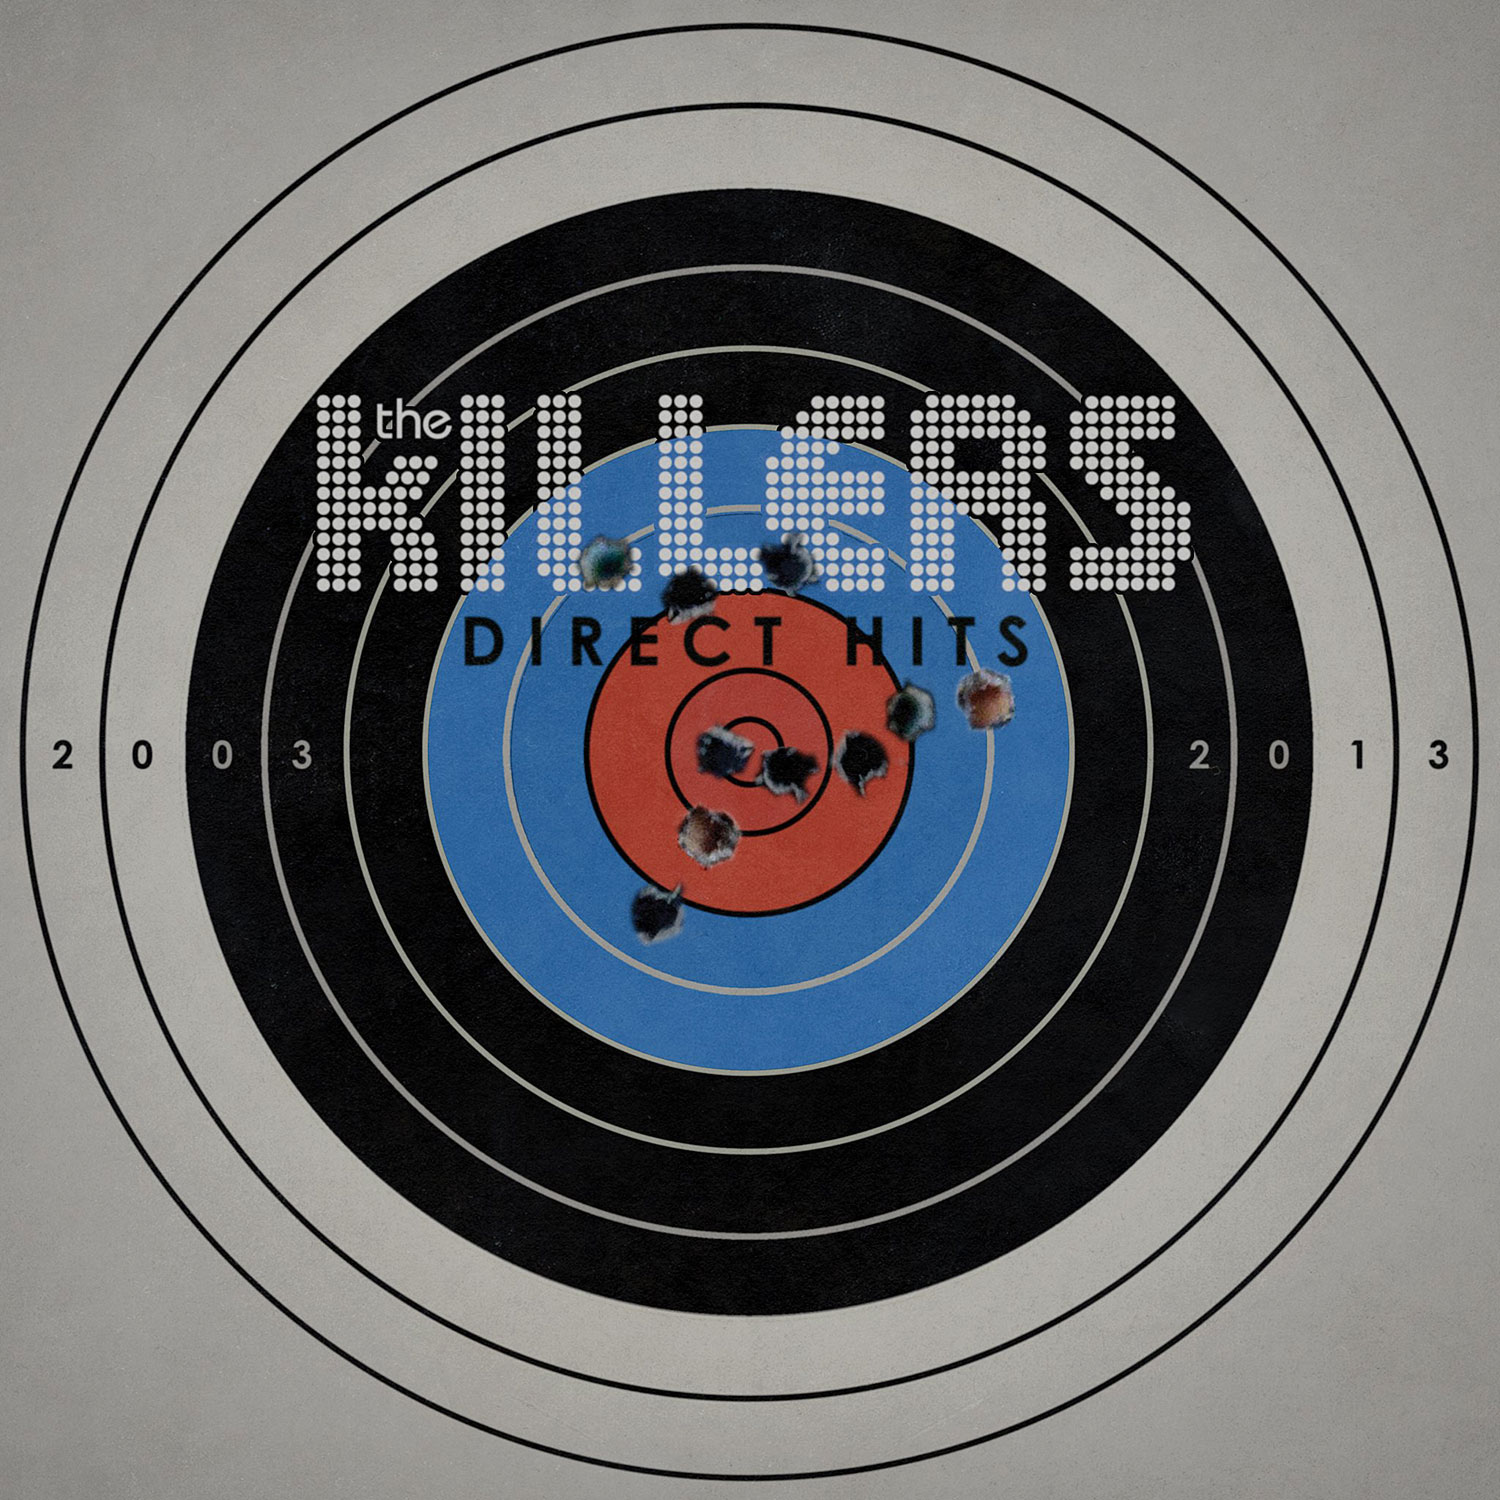 The Killers: Direct Hits, la portada del disco